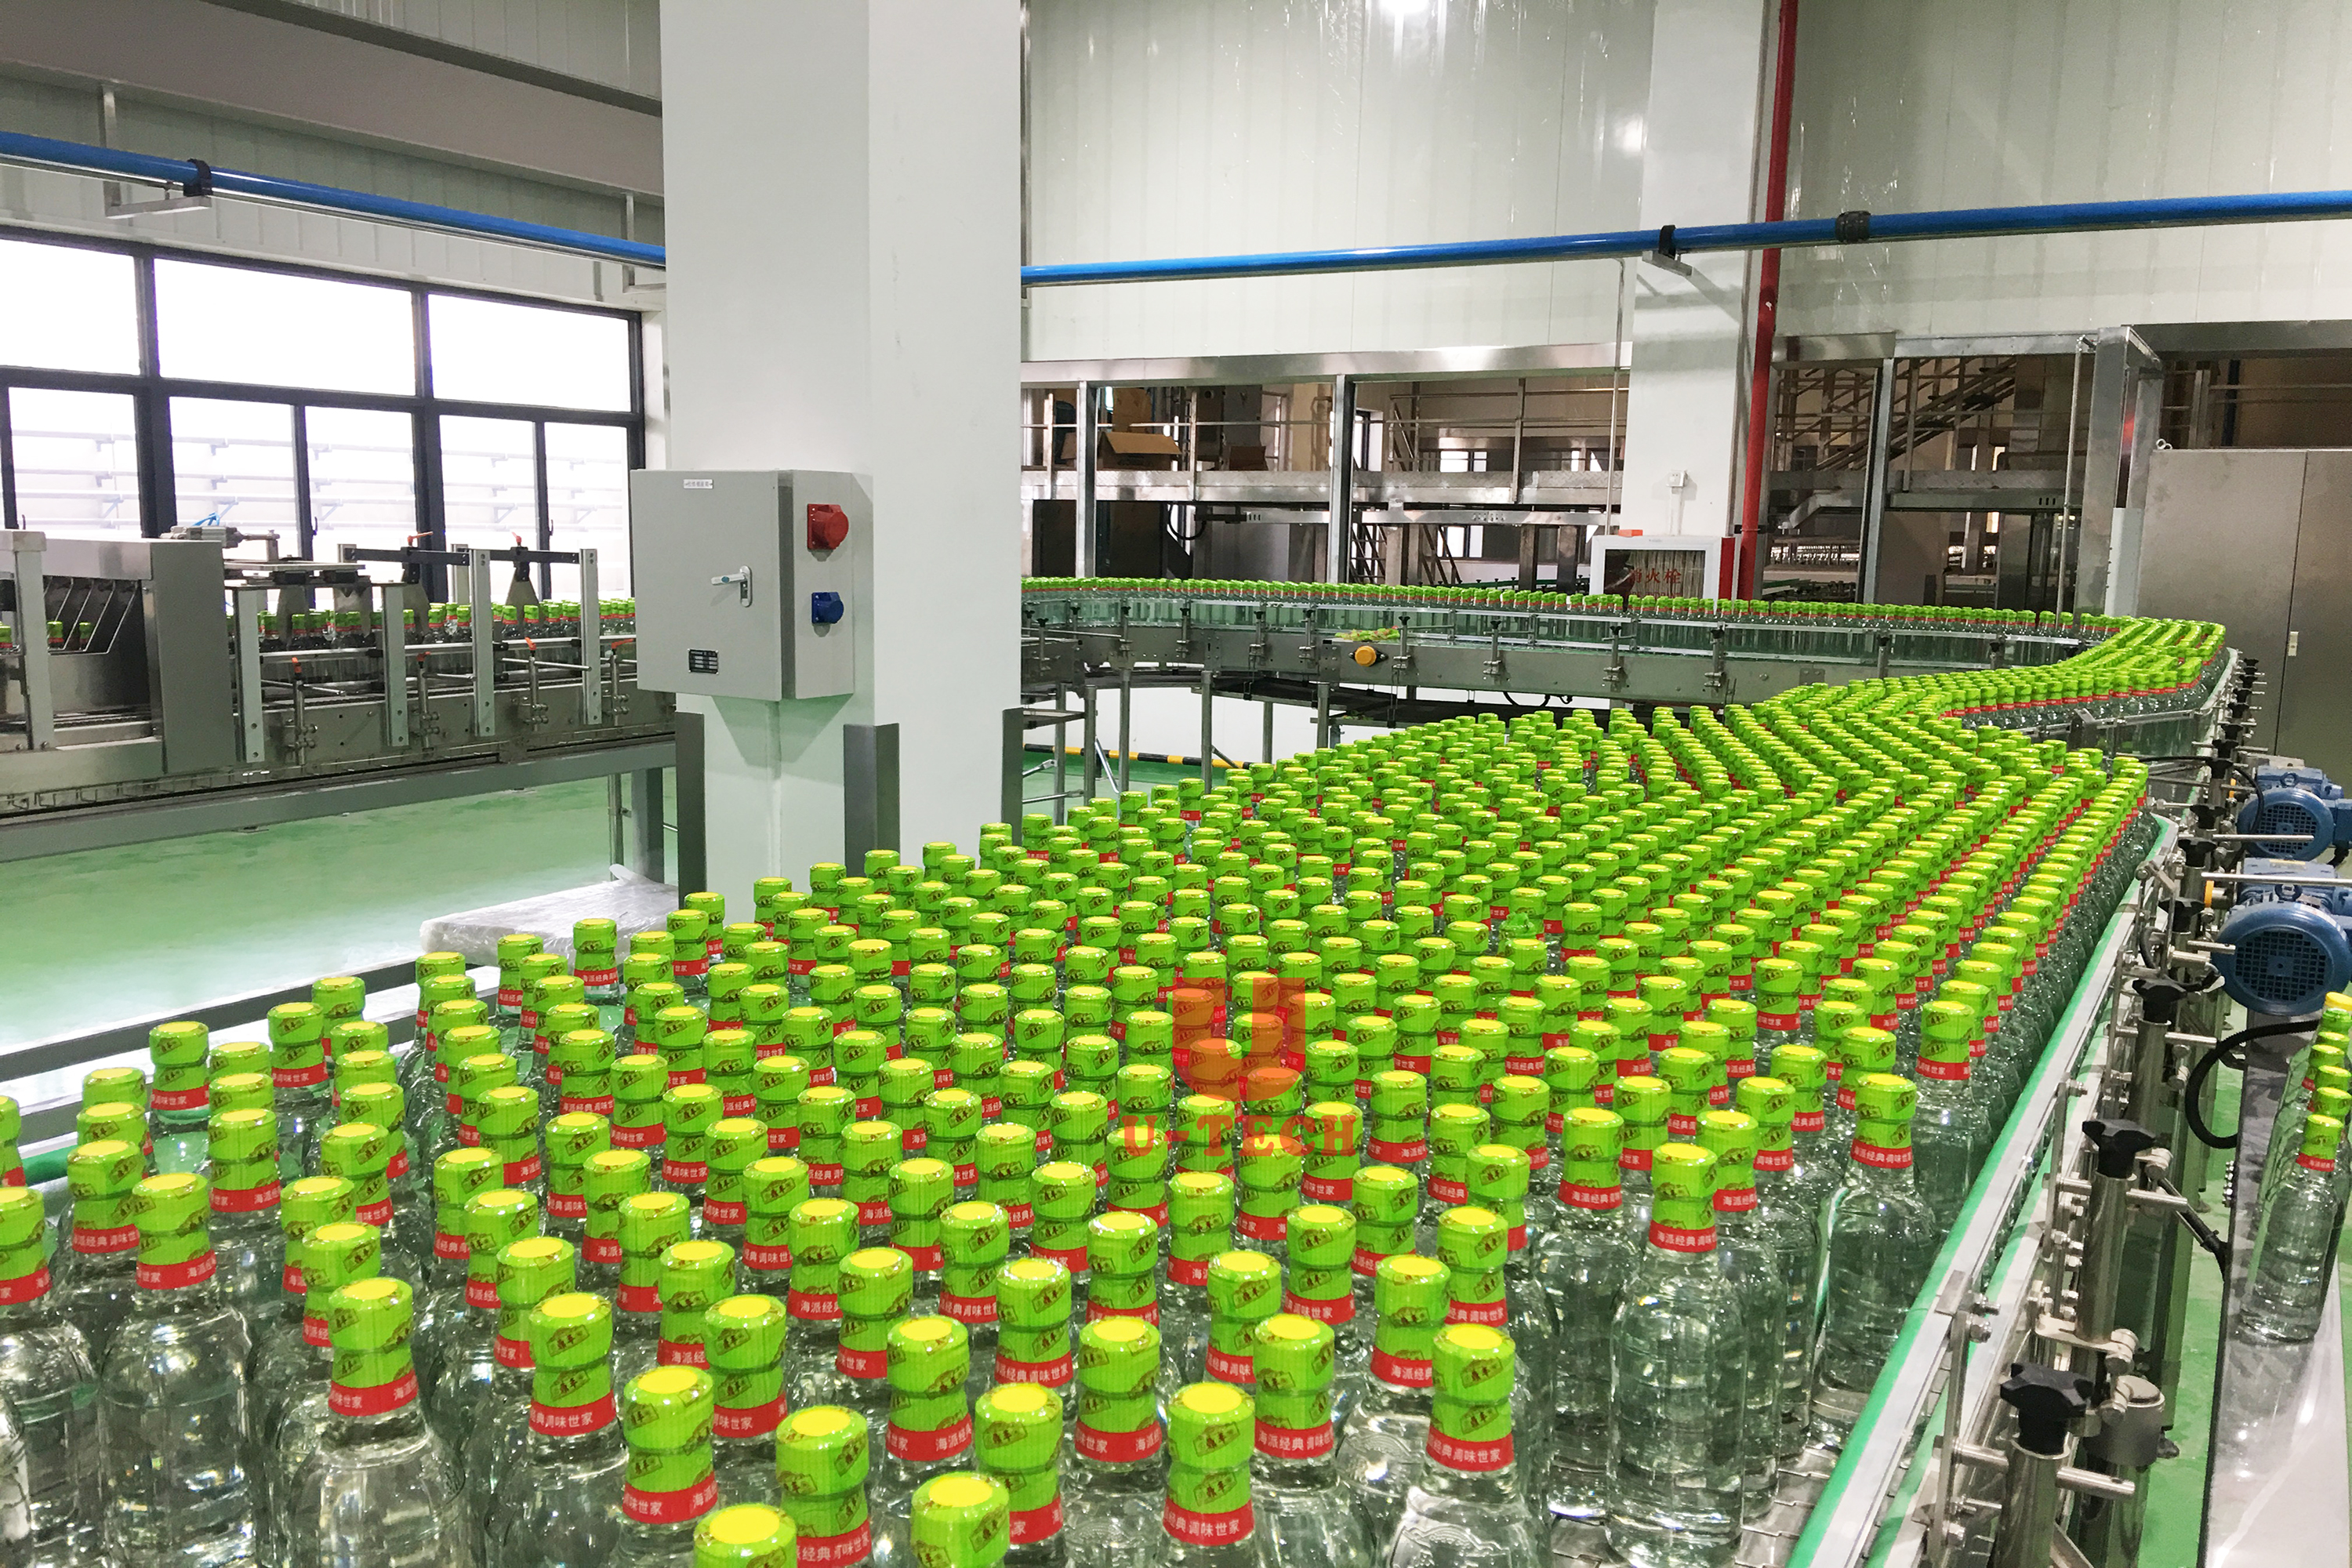 3000 - 5000BPH Automatic Glass Bottle Alcoholic Beverage Soft Drink Wine Filling Bottling Machine Production Line Plant 